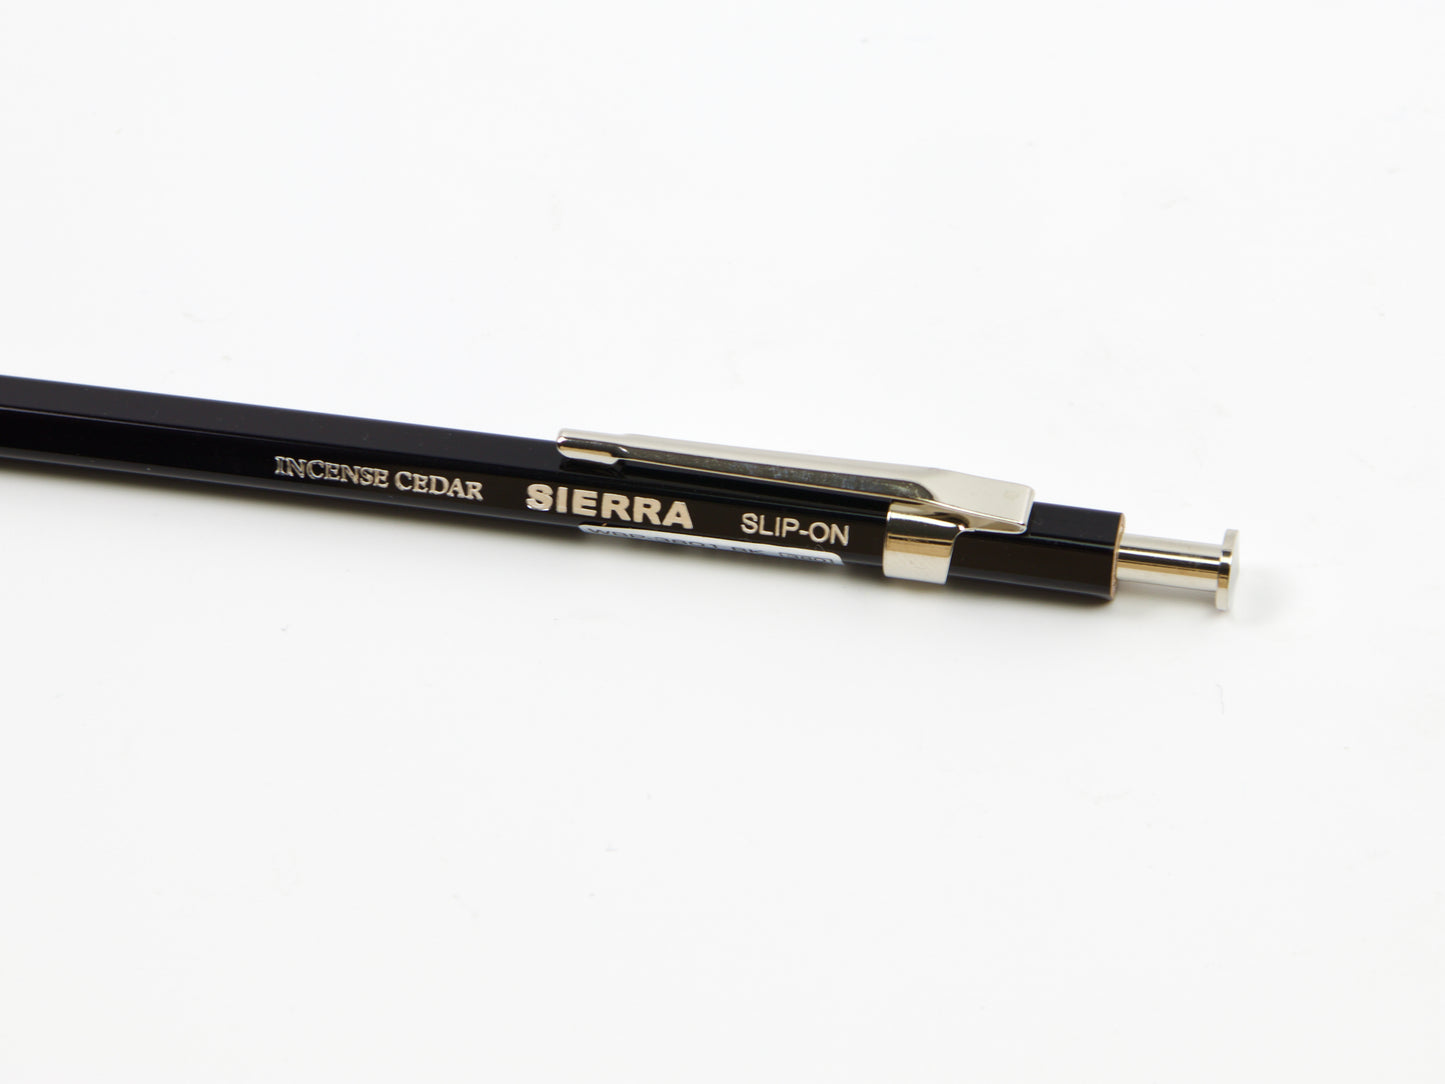 Sierra Slip-On Incense Cedar Pen